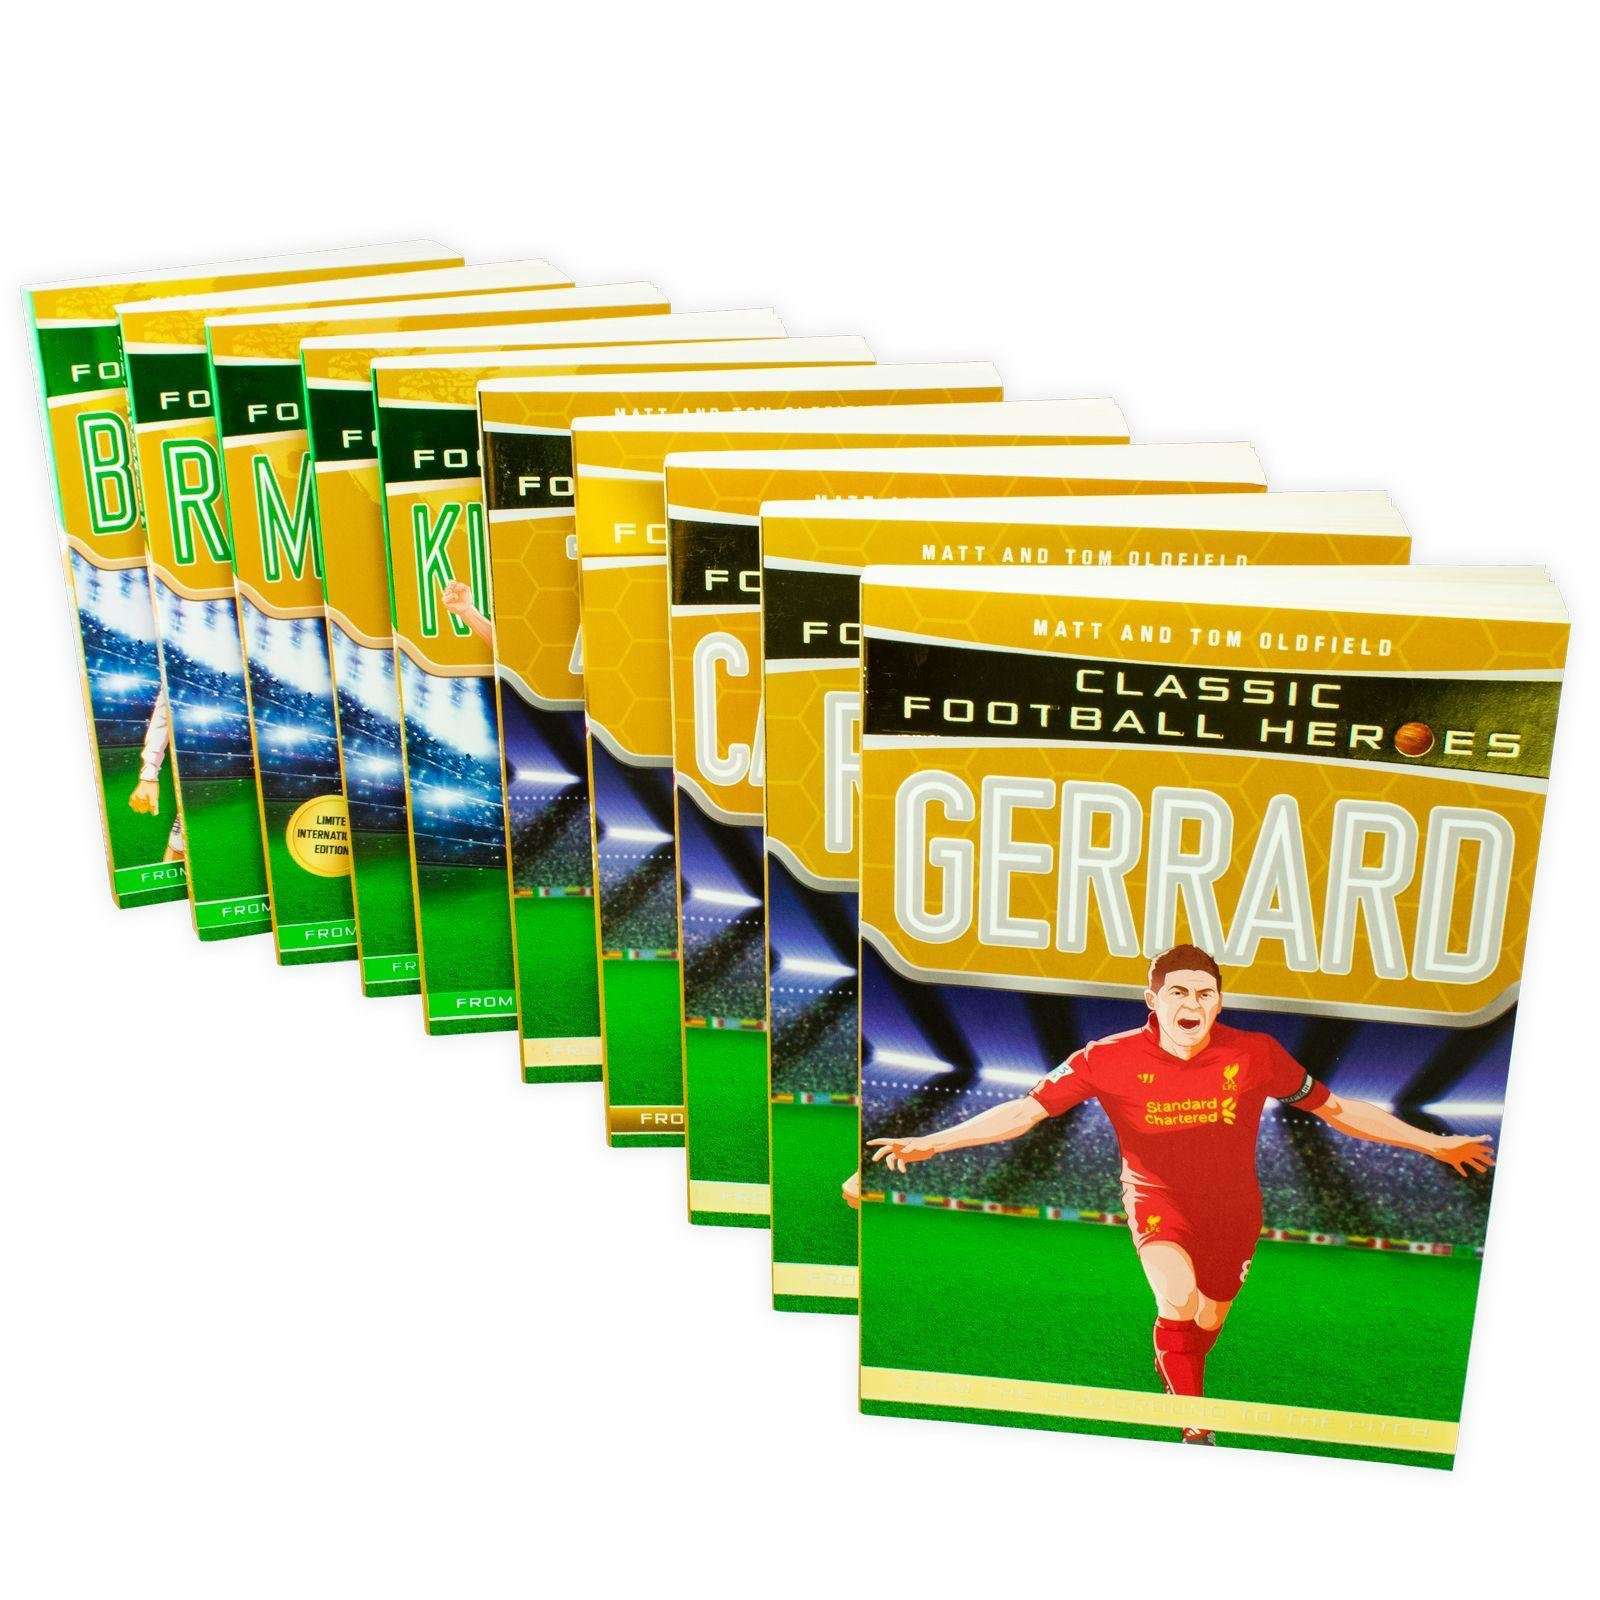 Classic Football Heroes Legend 10 Books Children Set Paperback By Matt & Tom - St Stephens Books